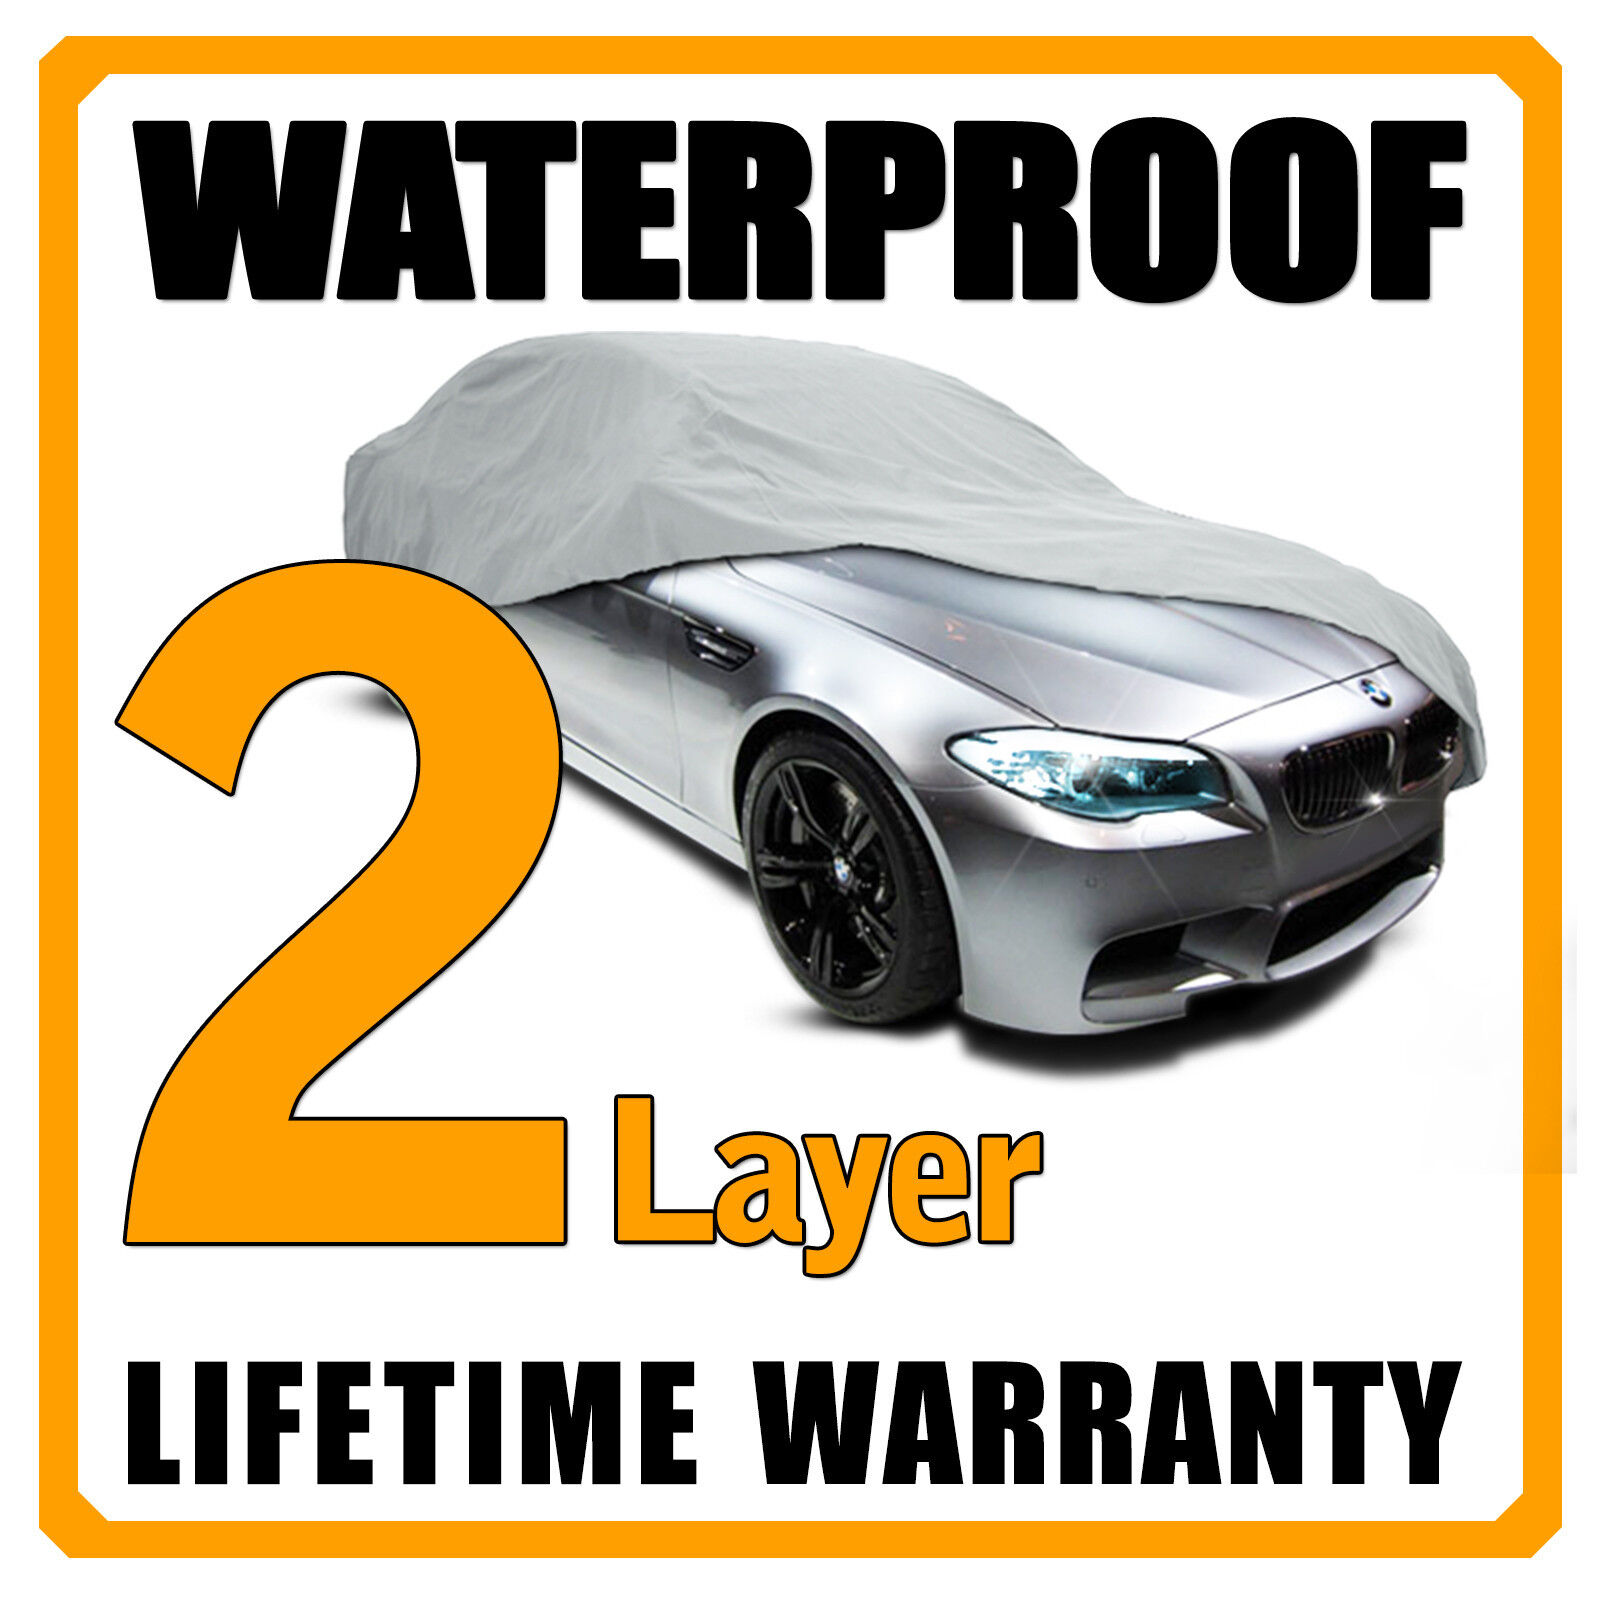 2 Layer Car Cover Breathable Waterproof Layers Outdoor Indoor Fleece Lining Fib1